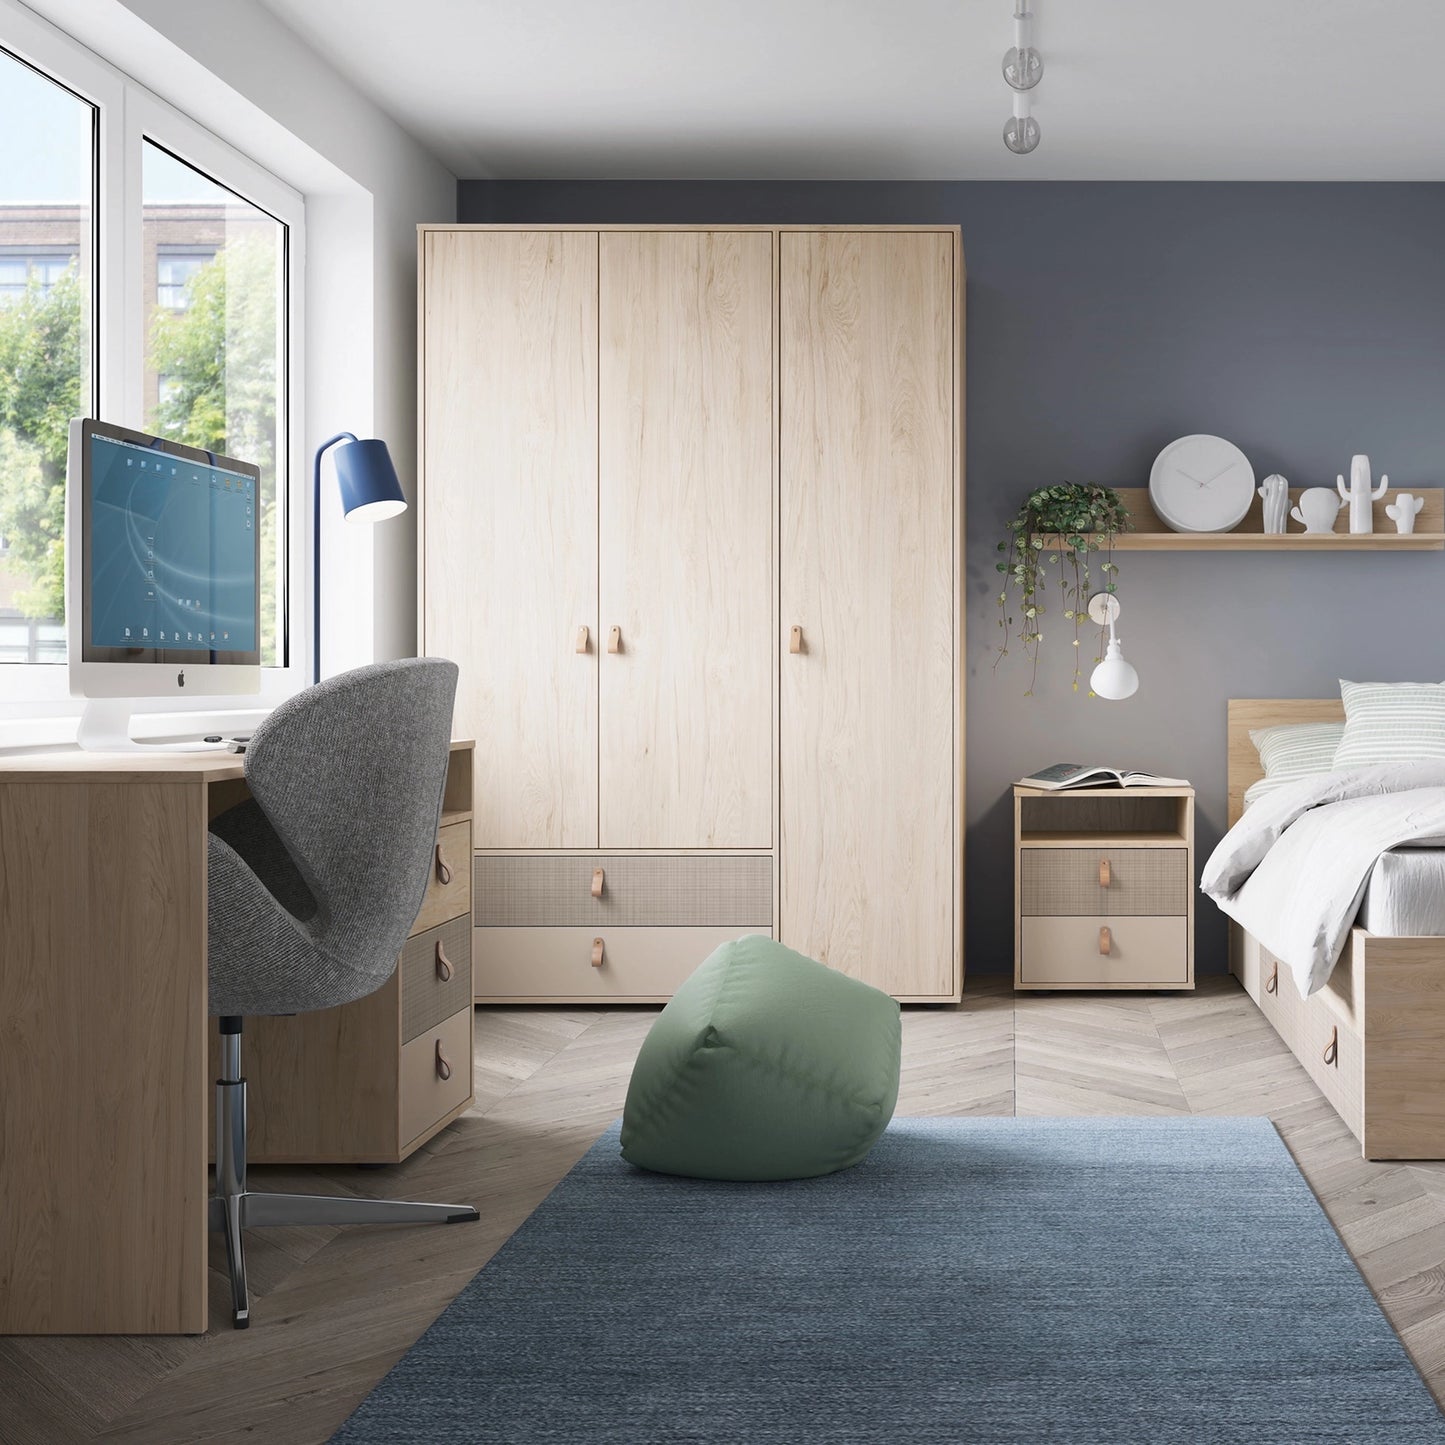 Furniture To Go Denim 2 Drawer Bedside Cabinet in Light Walnut, Grey Fabric Effect & Cashmere